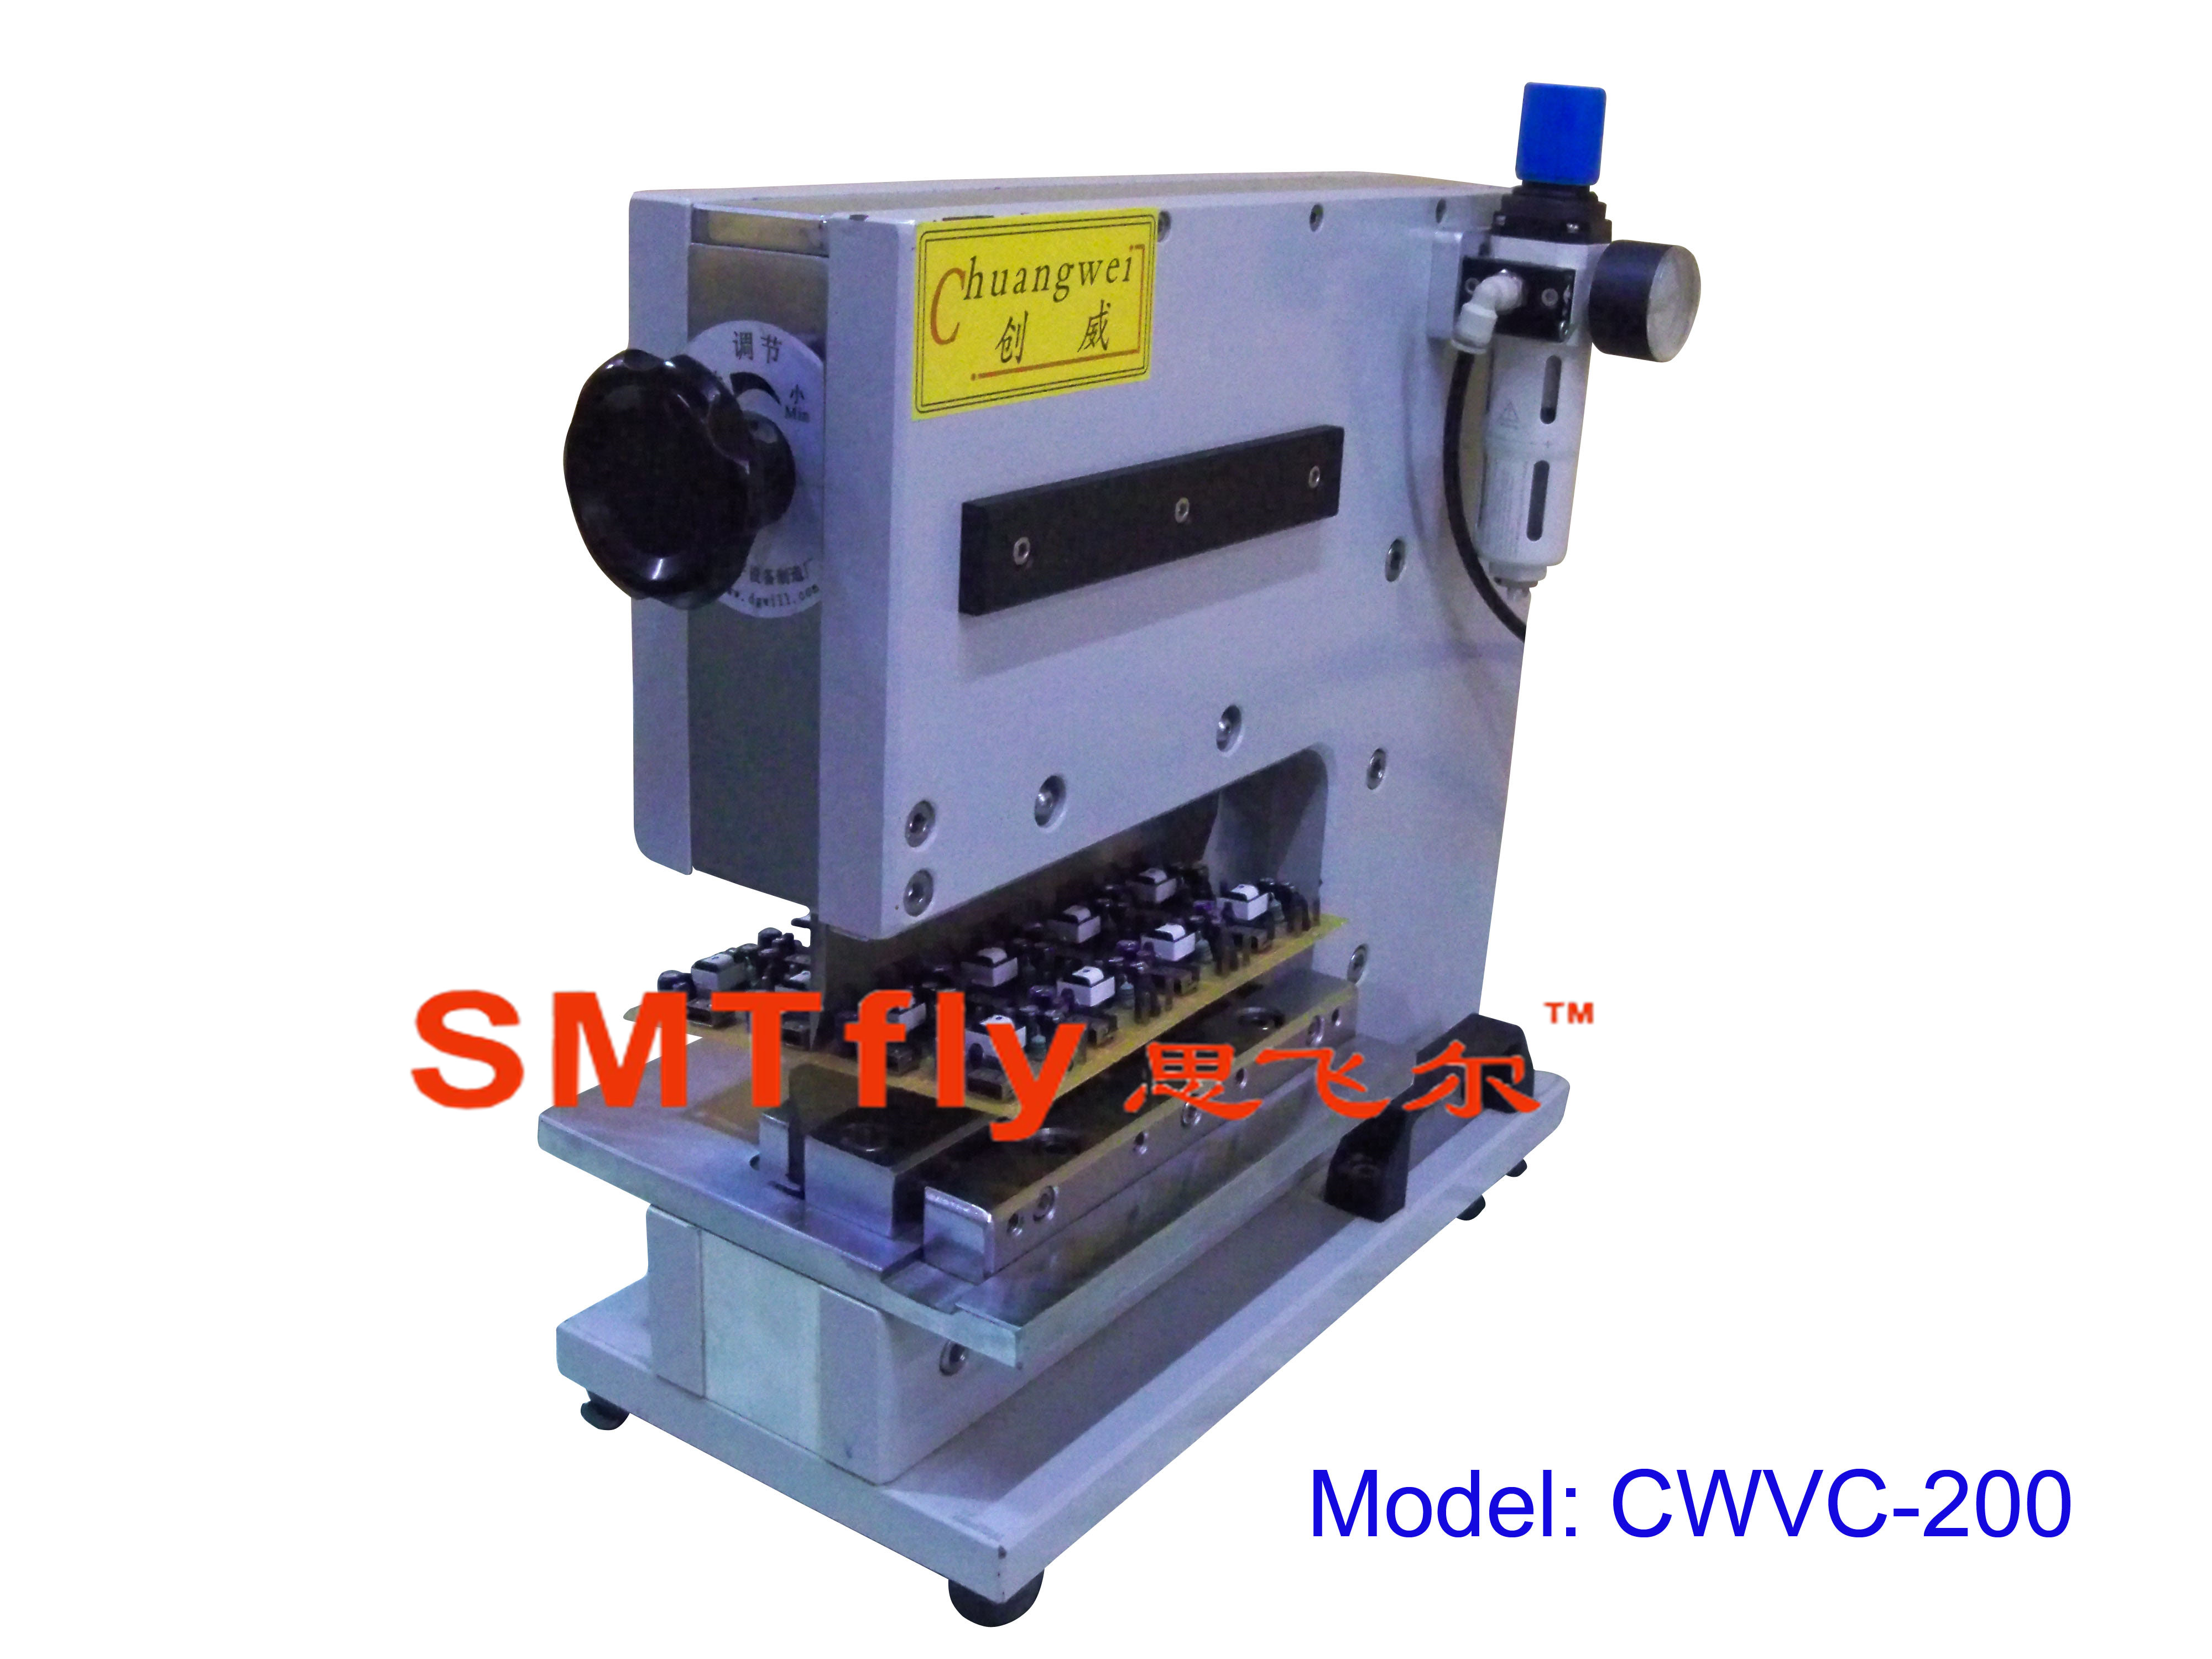 Automatic Circuit Board Cutting,SMTfly-200J